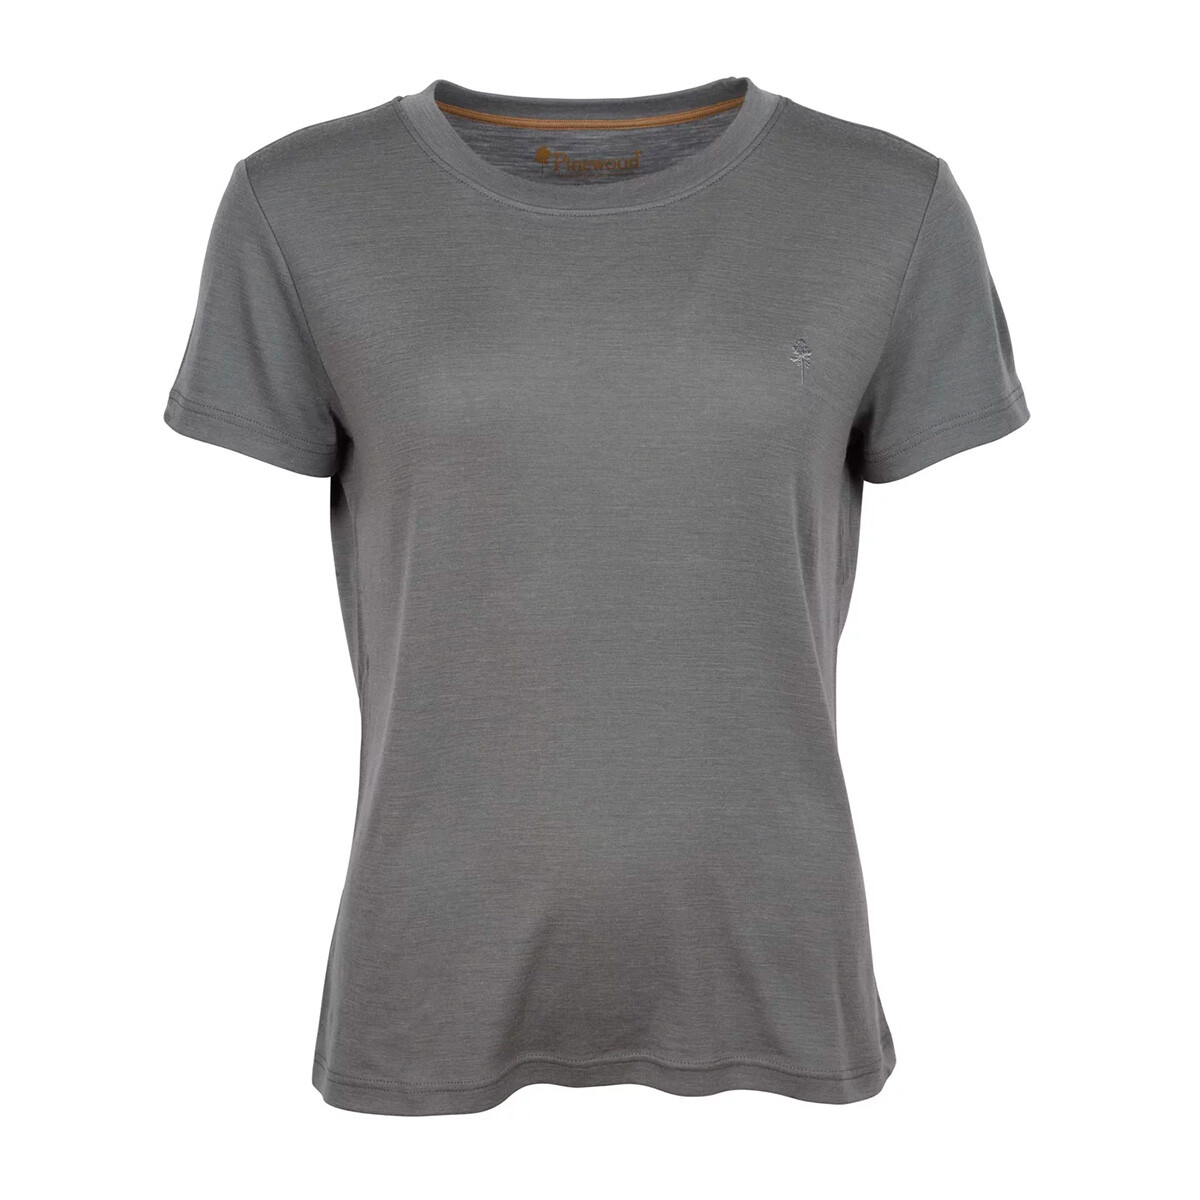 Se Pinewood Travel Merino T-shirt dame (Grey, 2XL) hos Specialbutikken